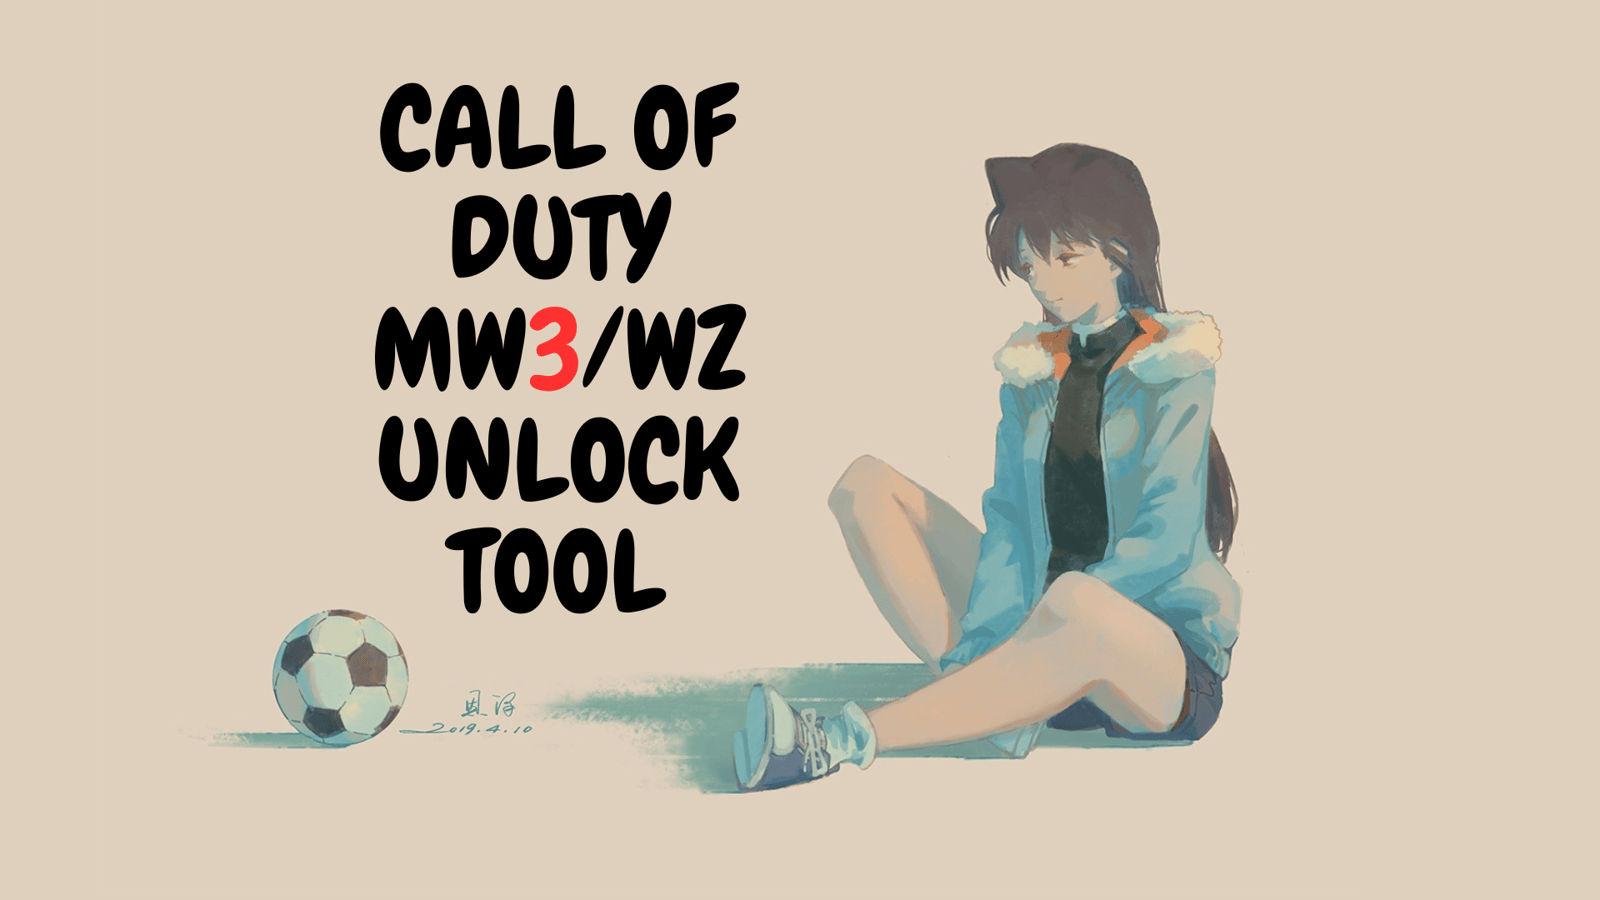 Call of Duty MW3/WZ Unlock Tool with Spwoofer/Blocker